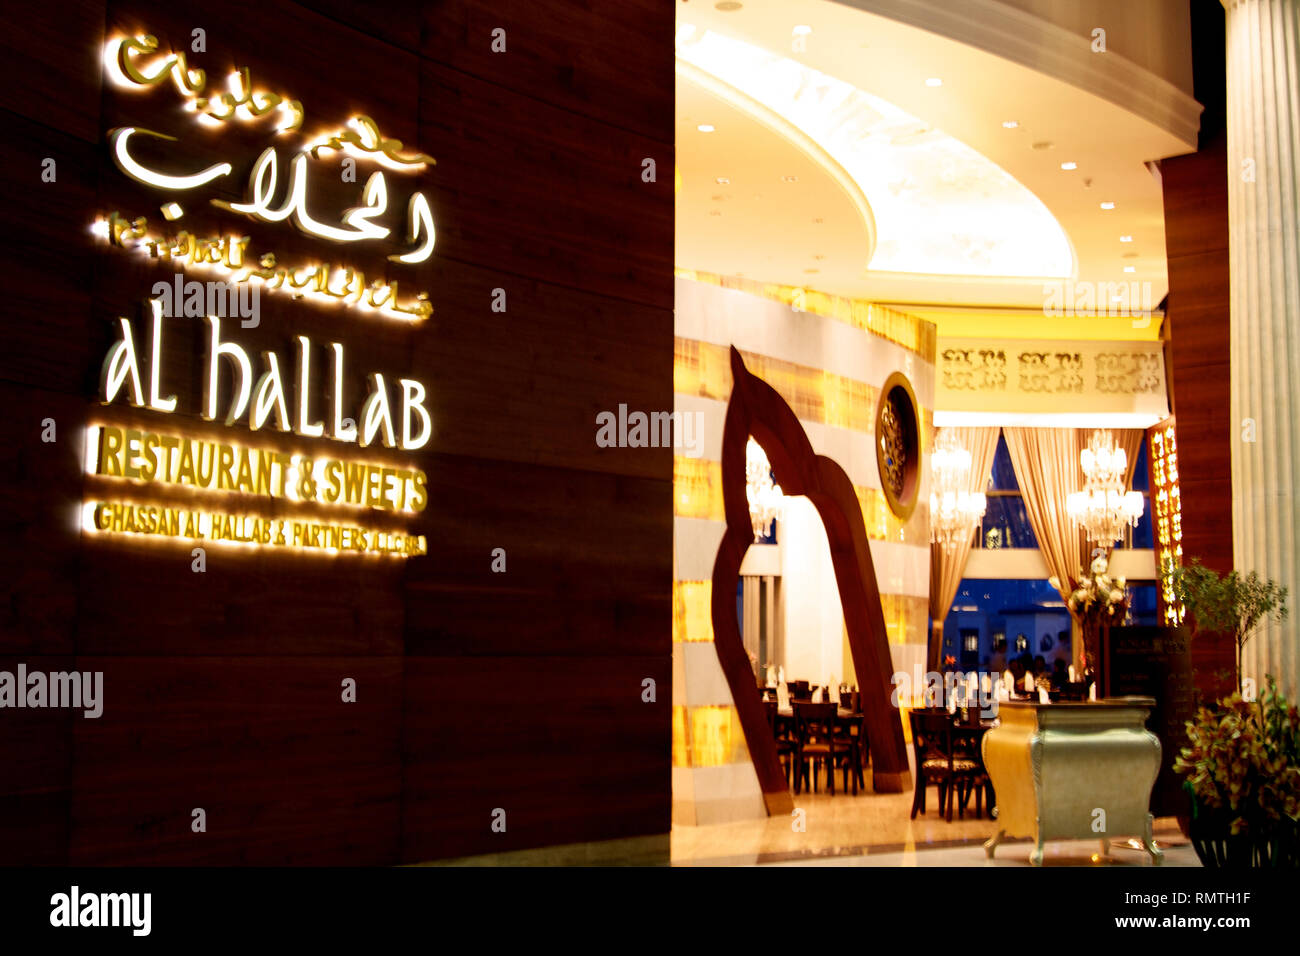 Dubai-Al Hallab restaurant and sweets inside Dubai Mall Stock Photo